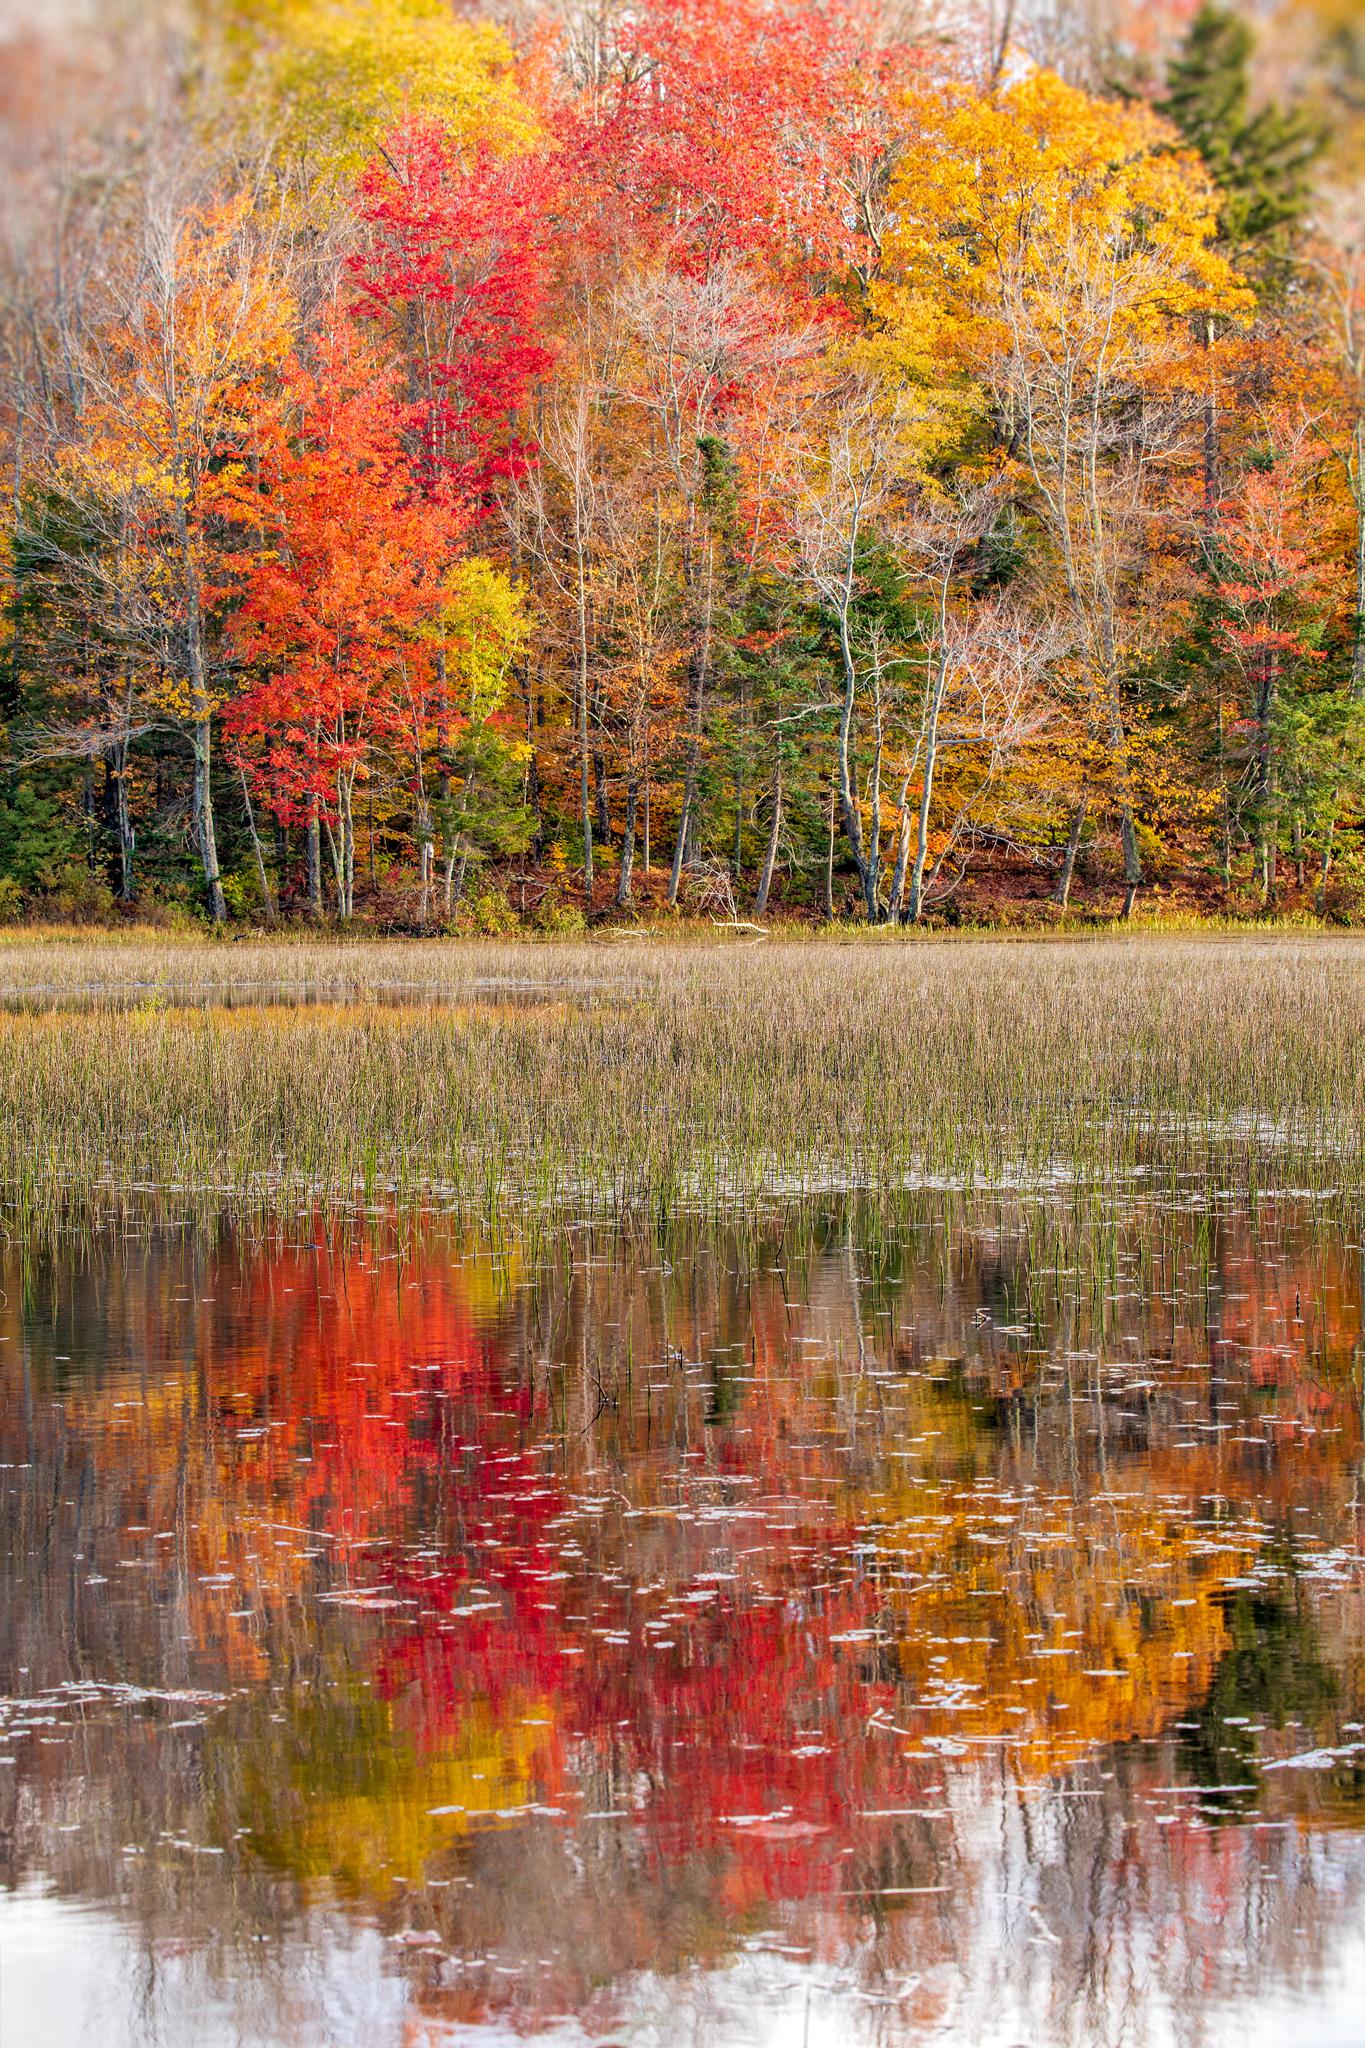 Alexandra Steedman Landscape Photograph - "Past Peak", Color Nature Photography, Landscape, Trees, Autumn, Fall Foliage